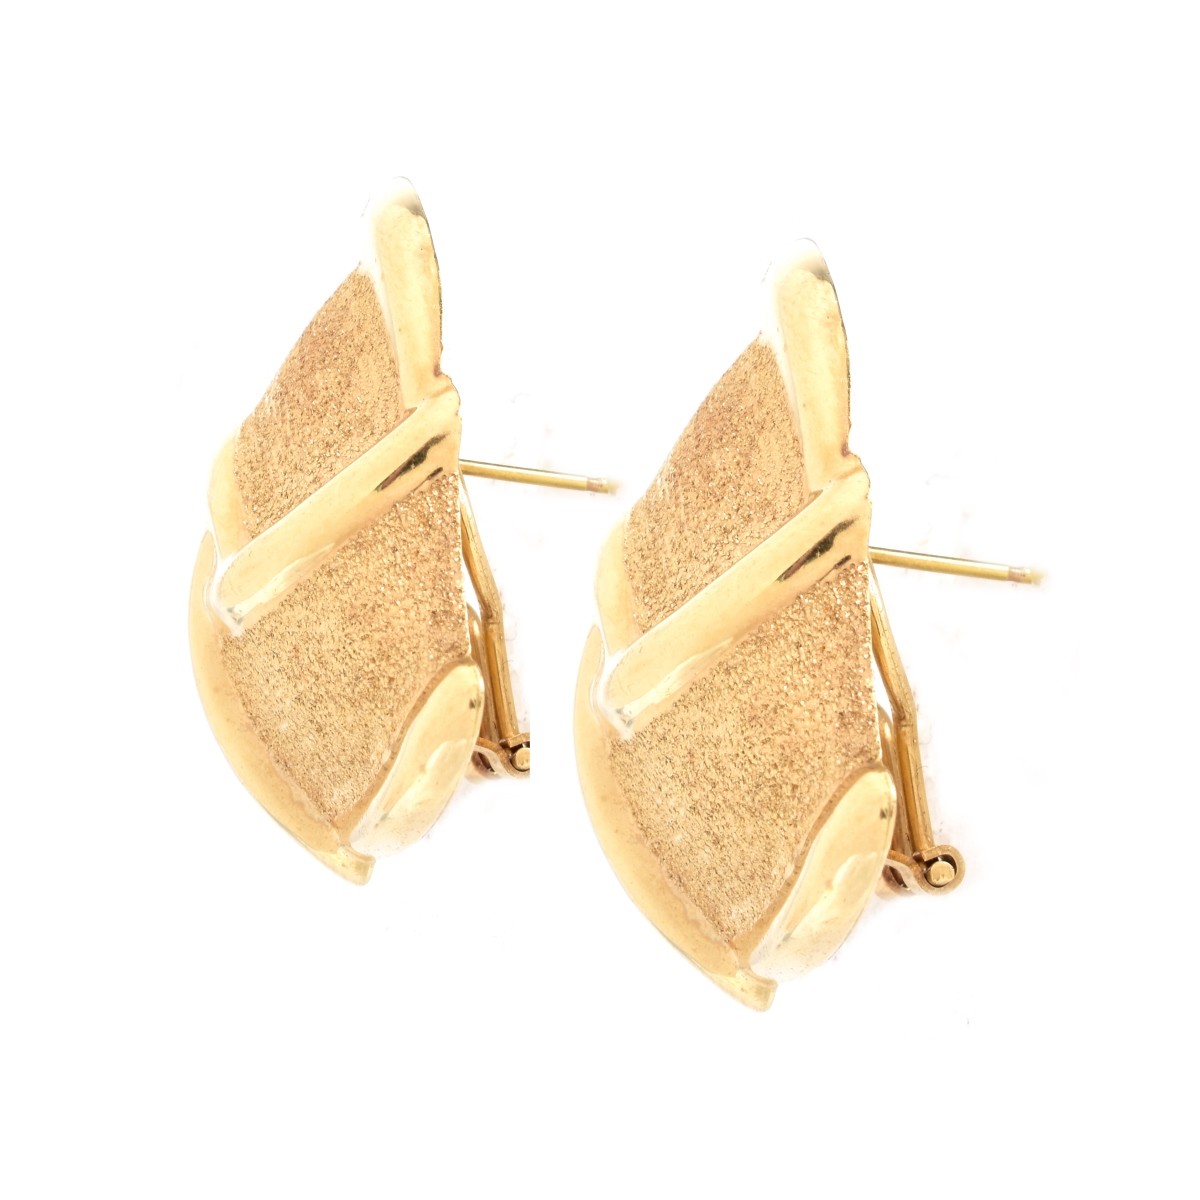 Vintage 14K Gold Earrings